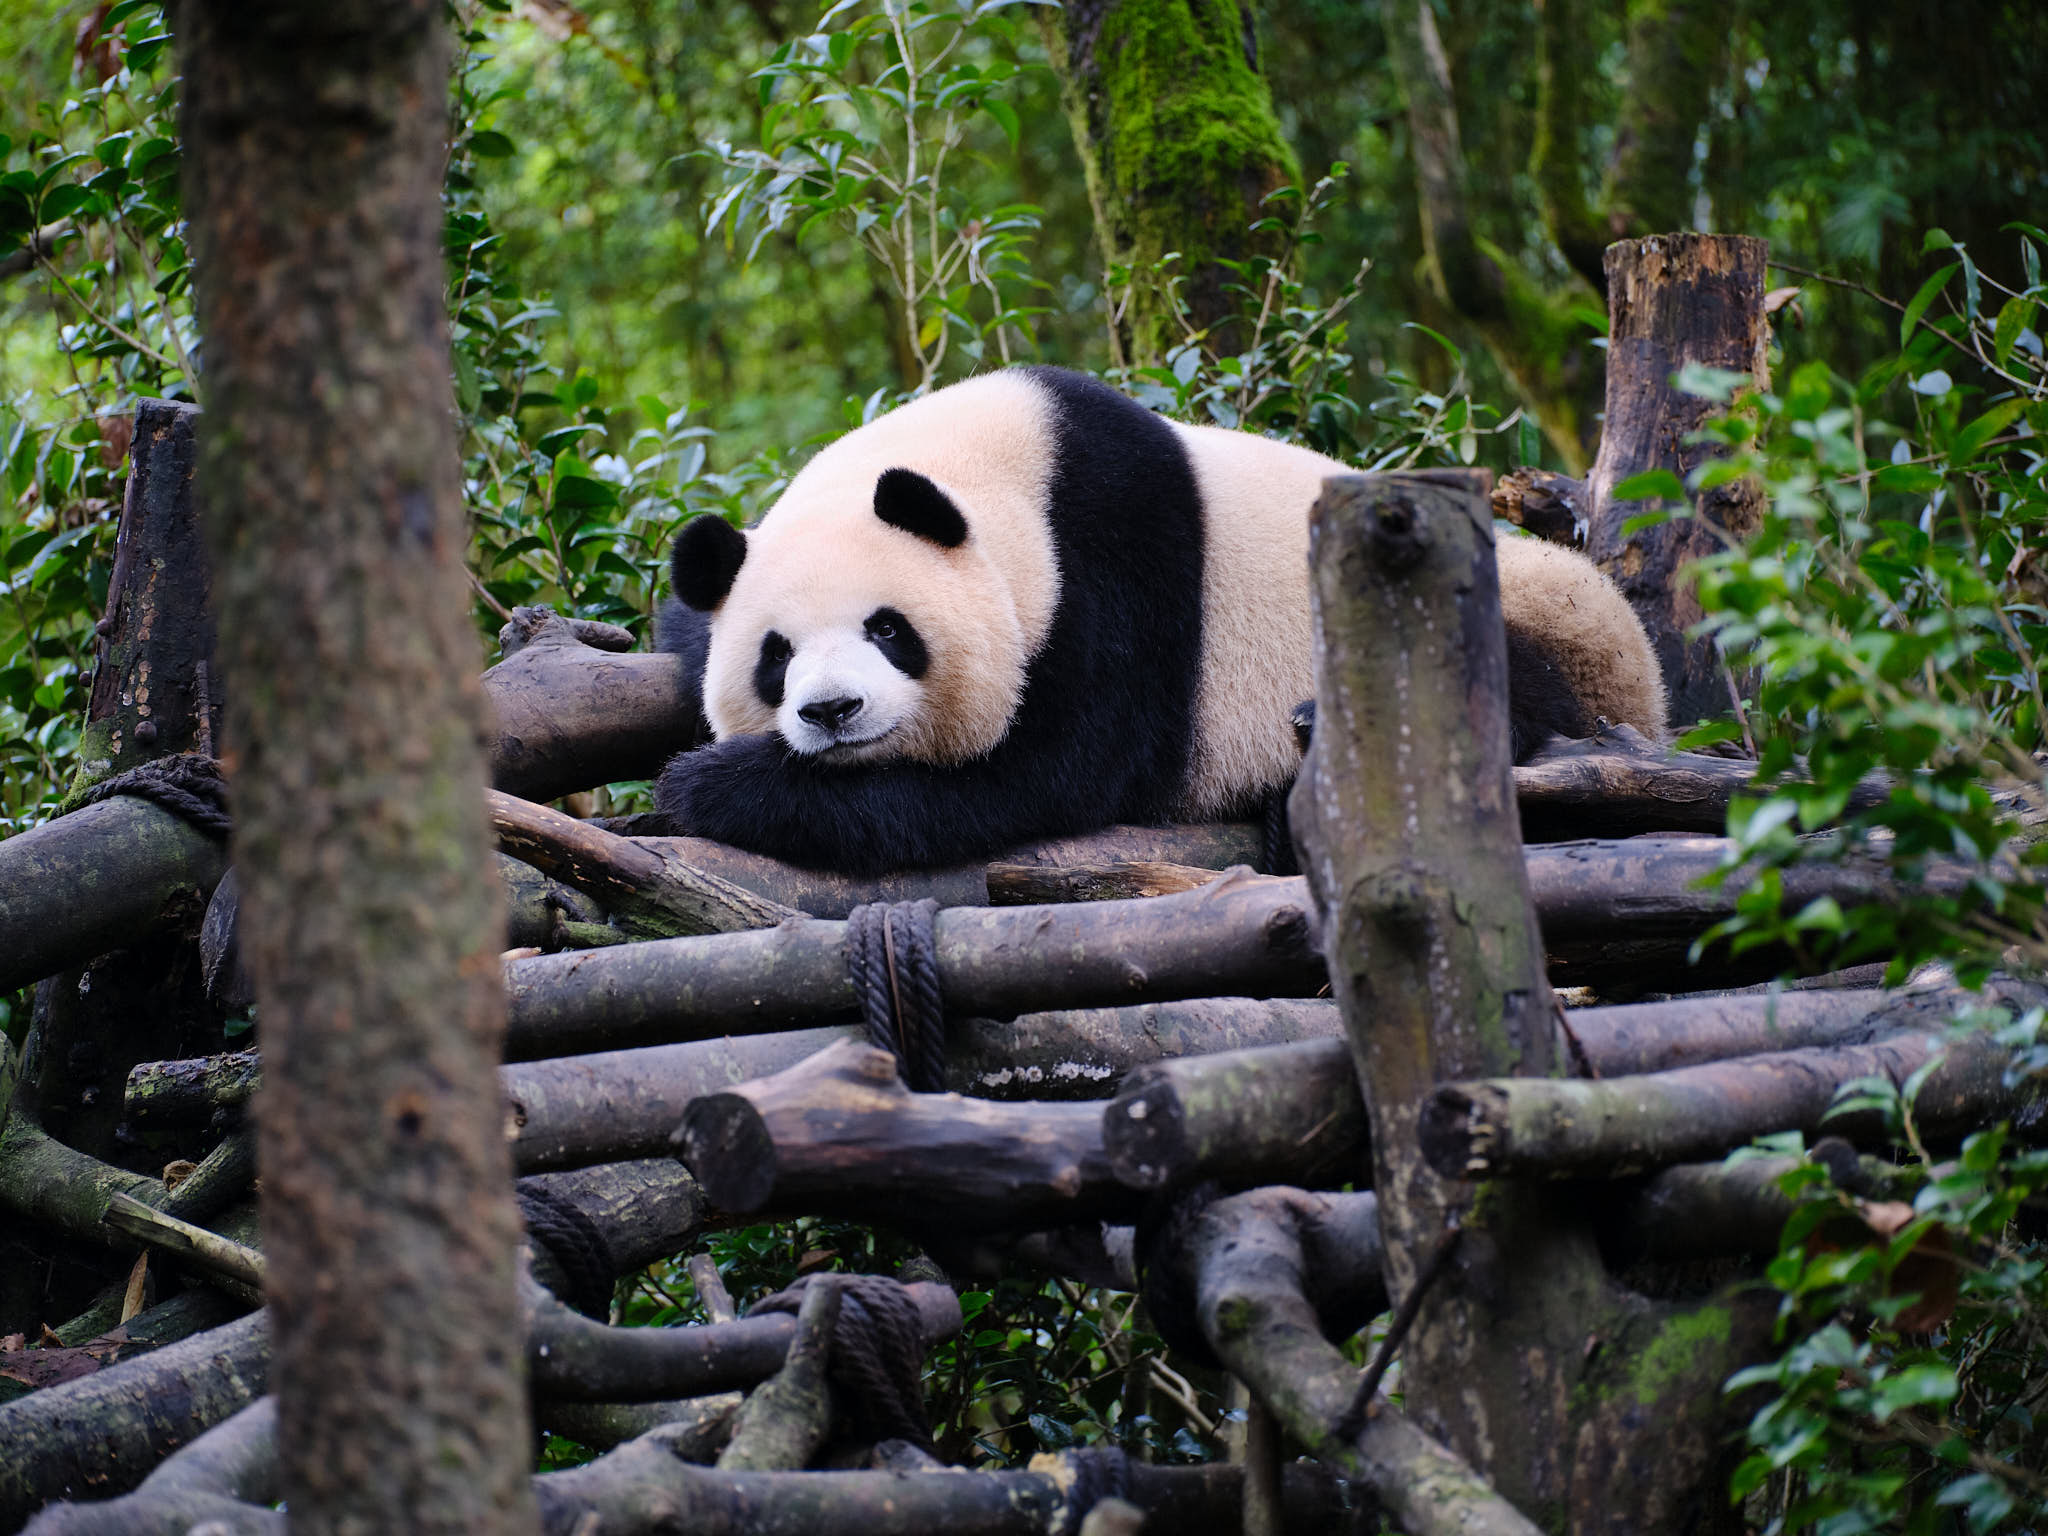 Giant panda sleeping on bamboo tree at Chengdu Giant Panda Research Centre